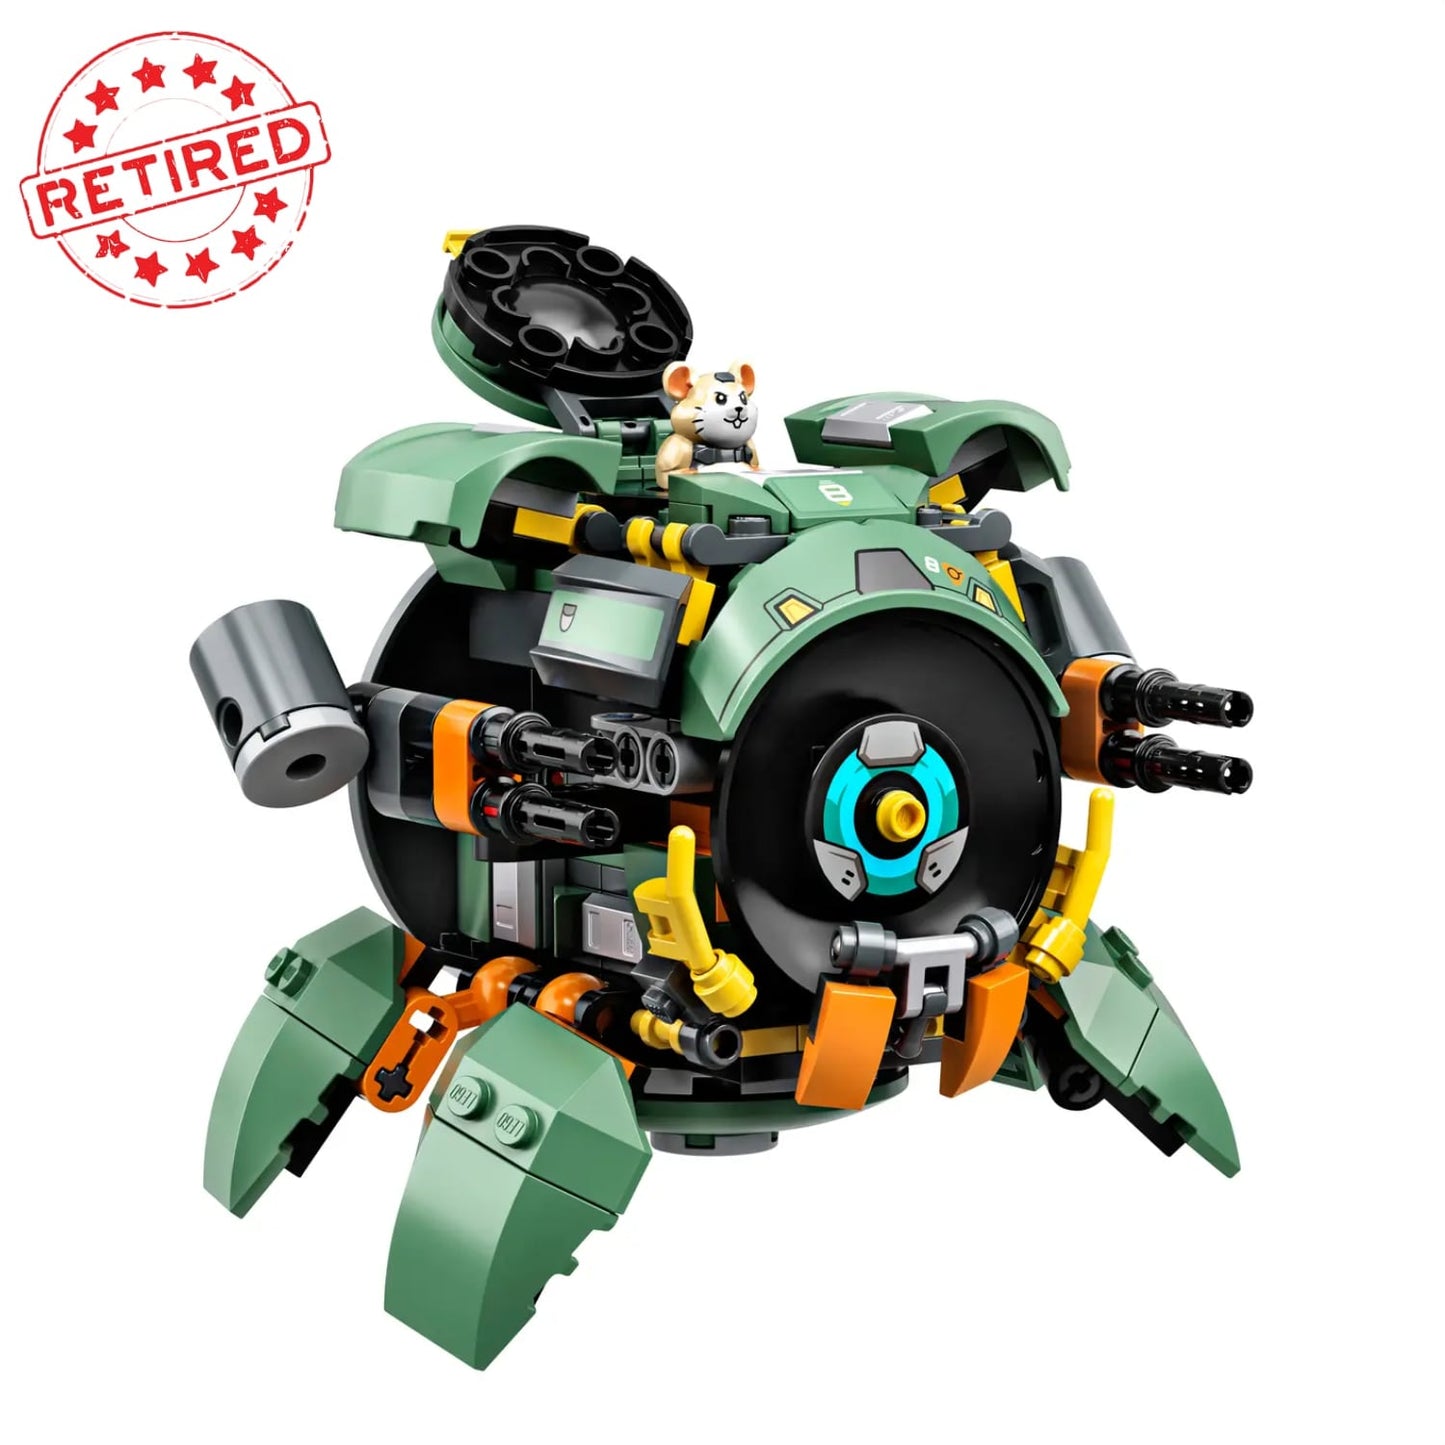 Lego 75976 Overwatch Wrecking Ball